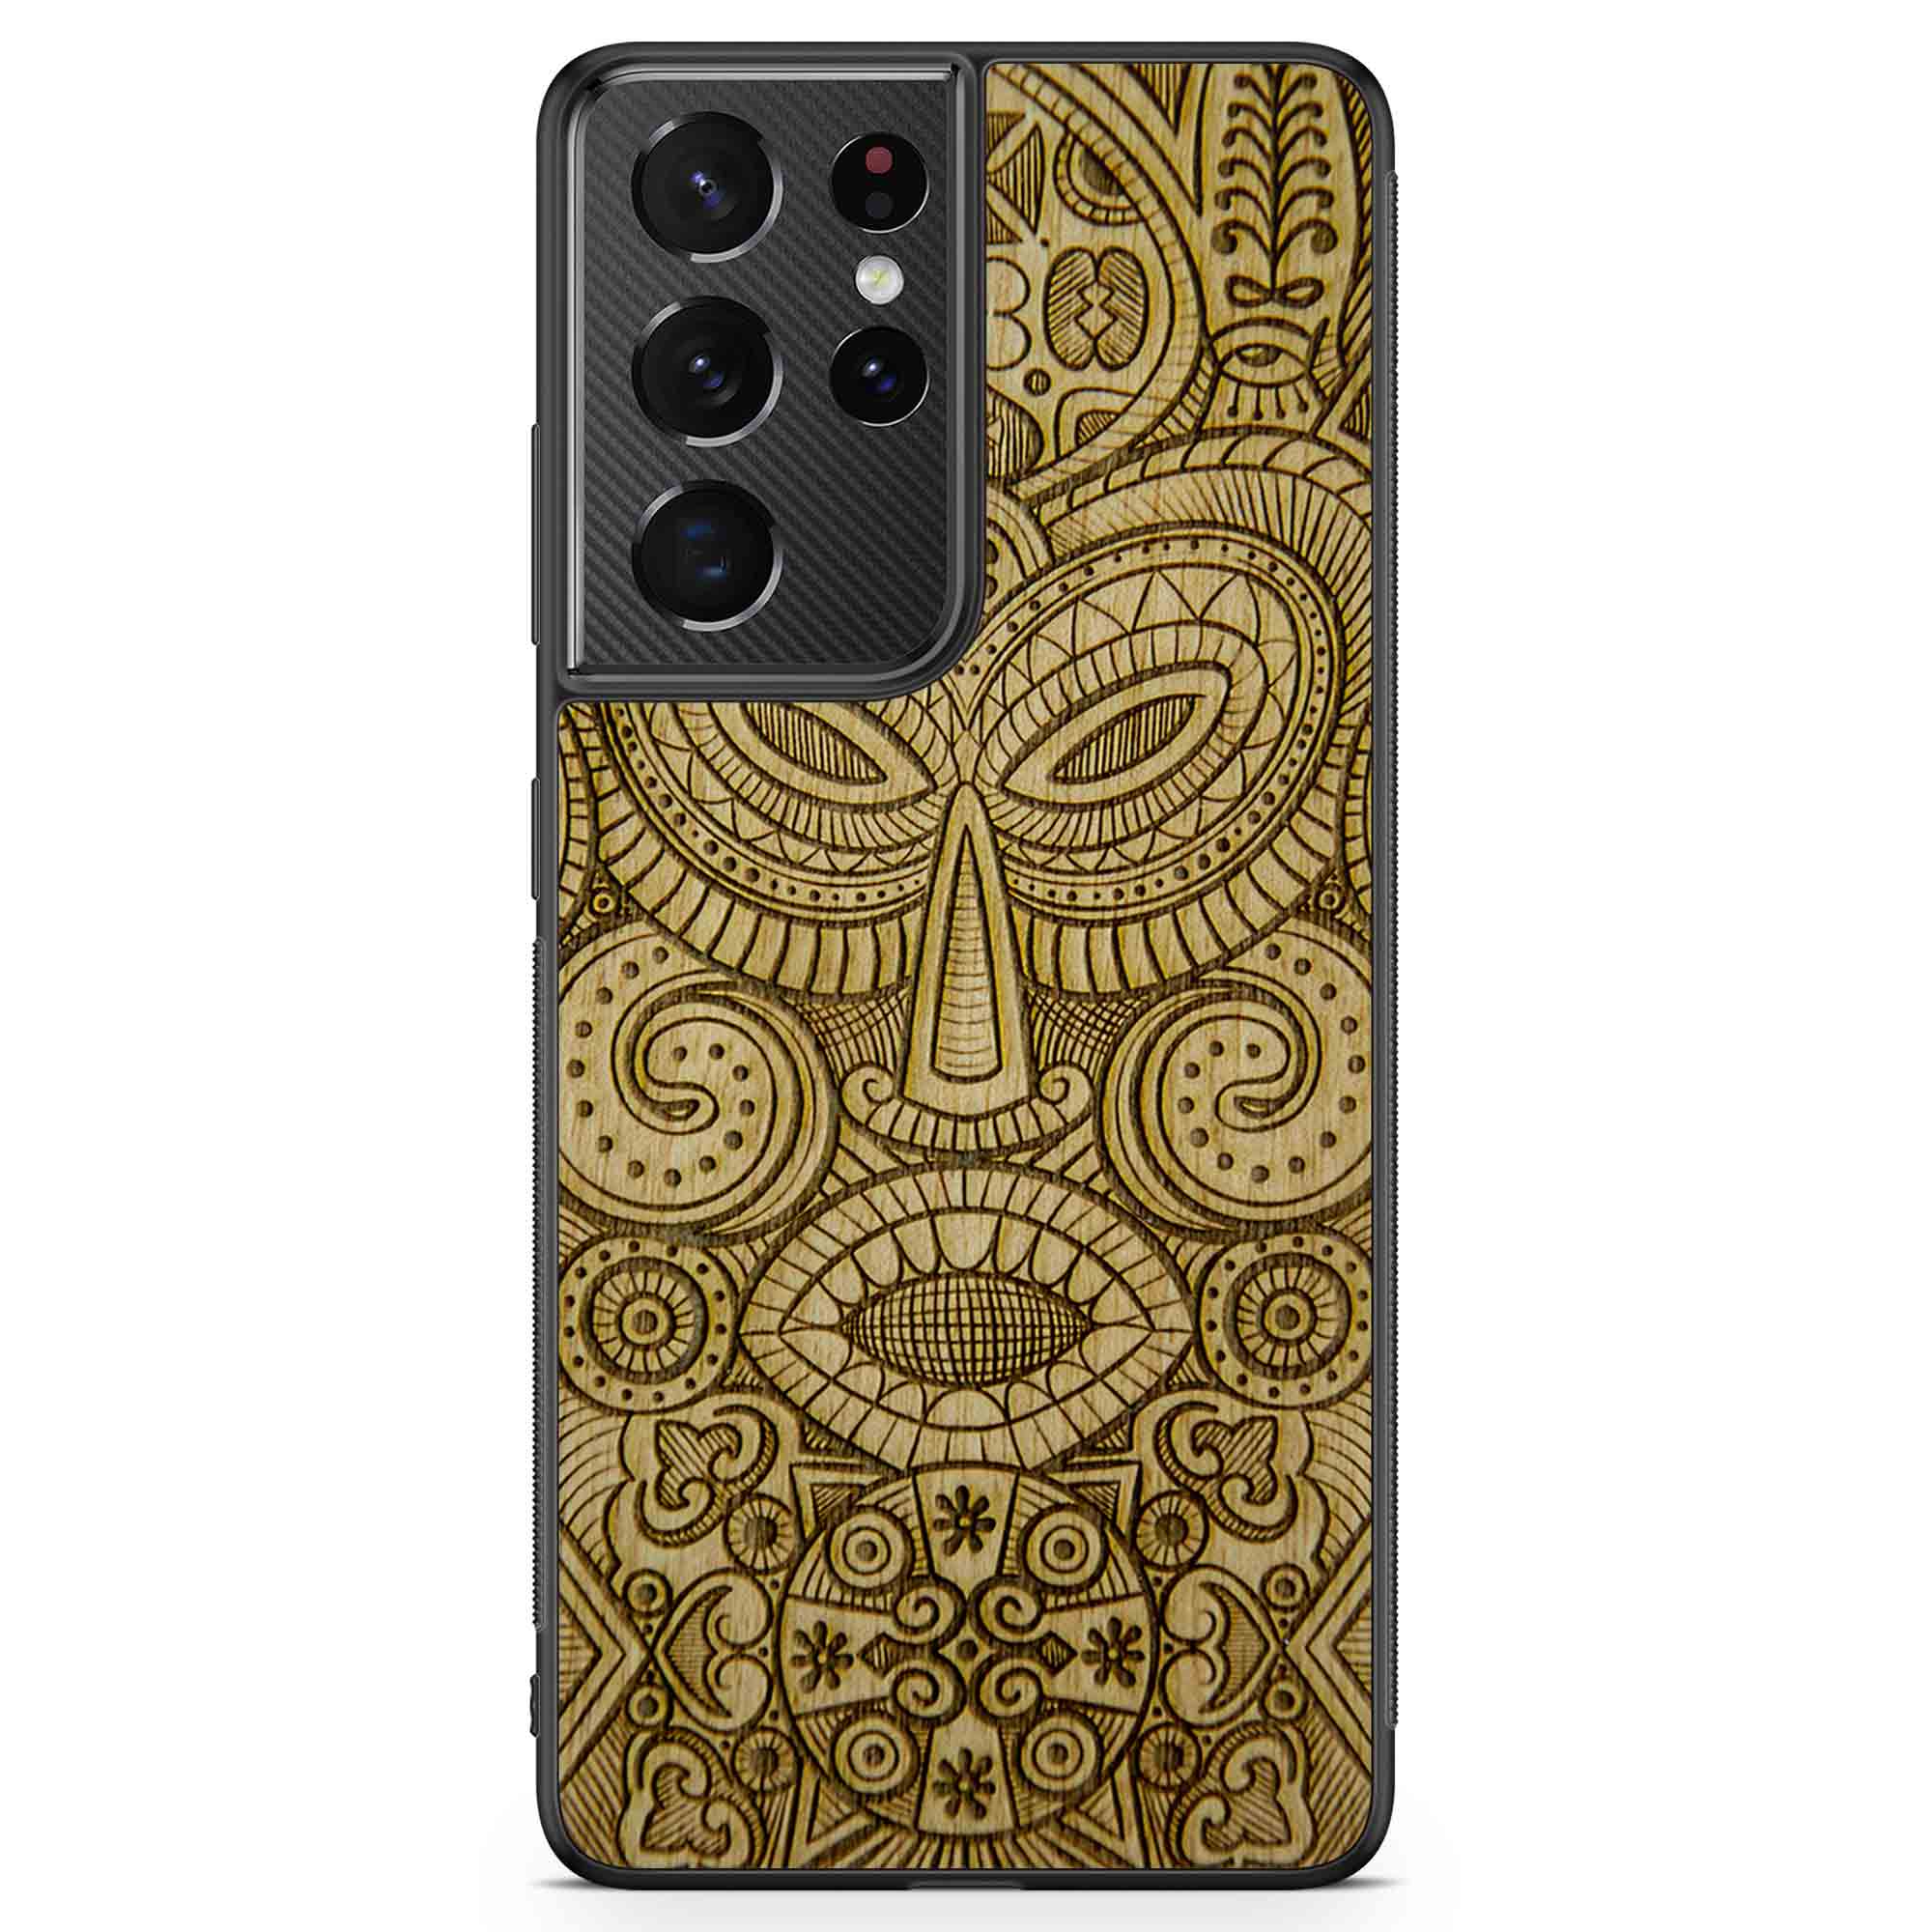 Tribal Mask Чехол для телефона Samsung S21 Ultra Wood из дерева